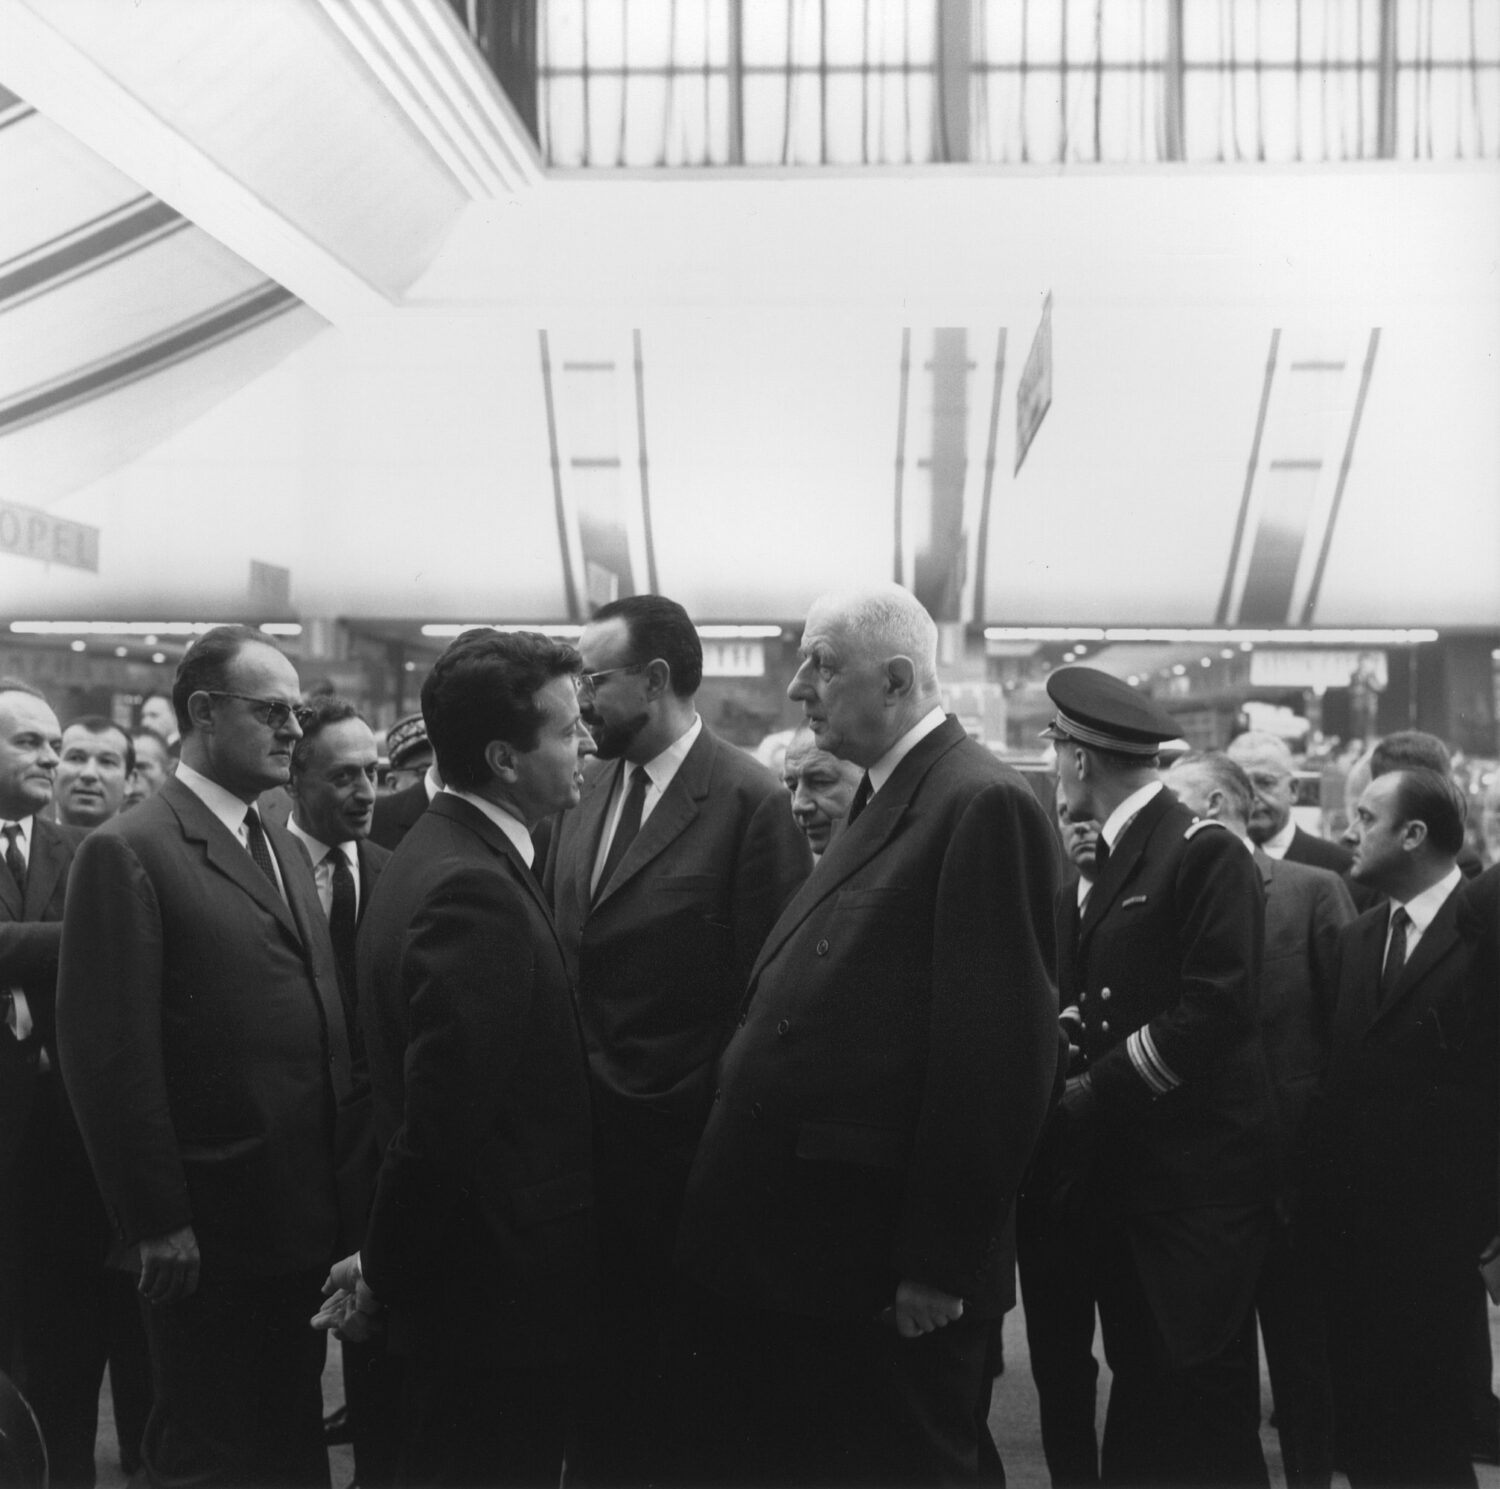 Salon de lAutomobile 1966 - Jean REDELE - Charles DE GAULLE.jpg